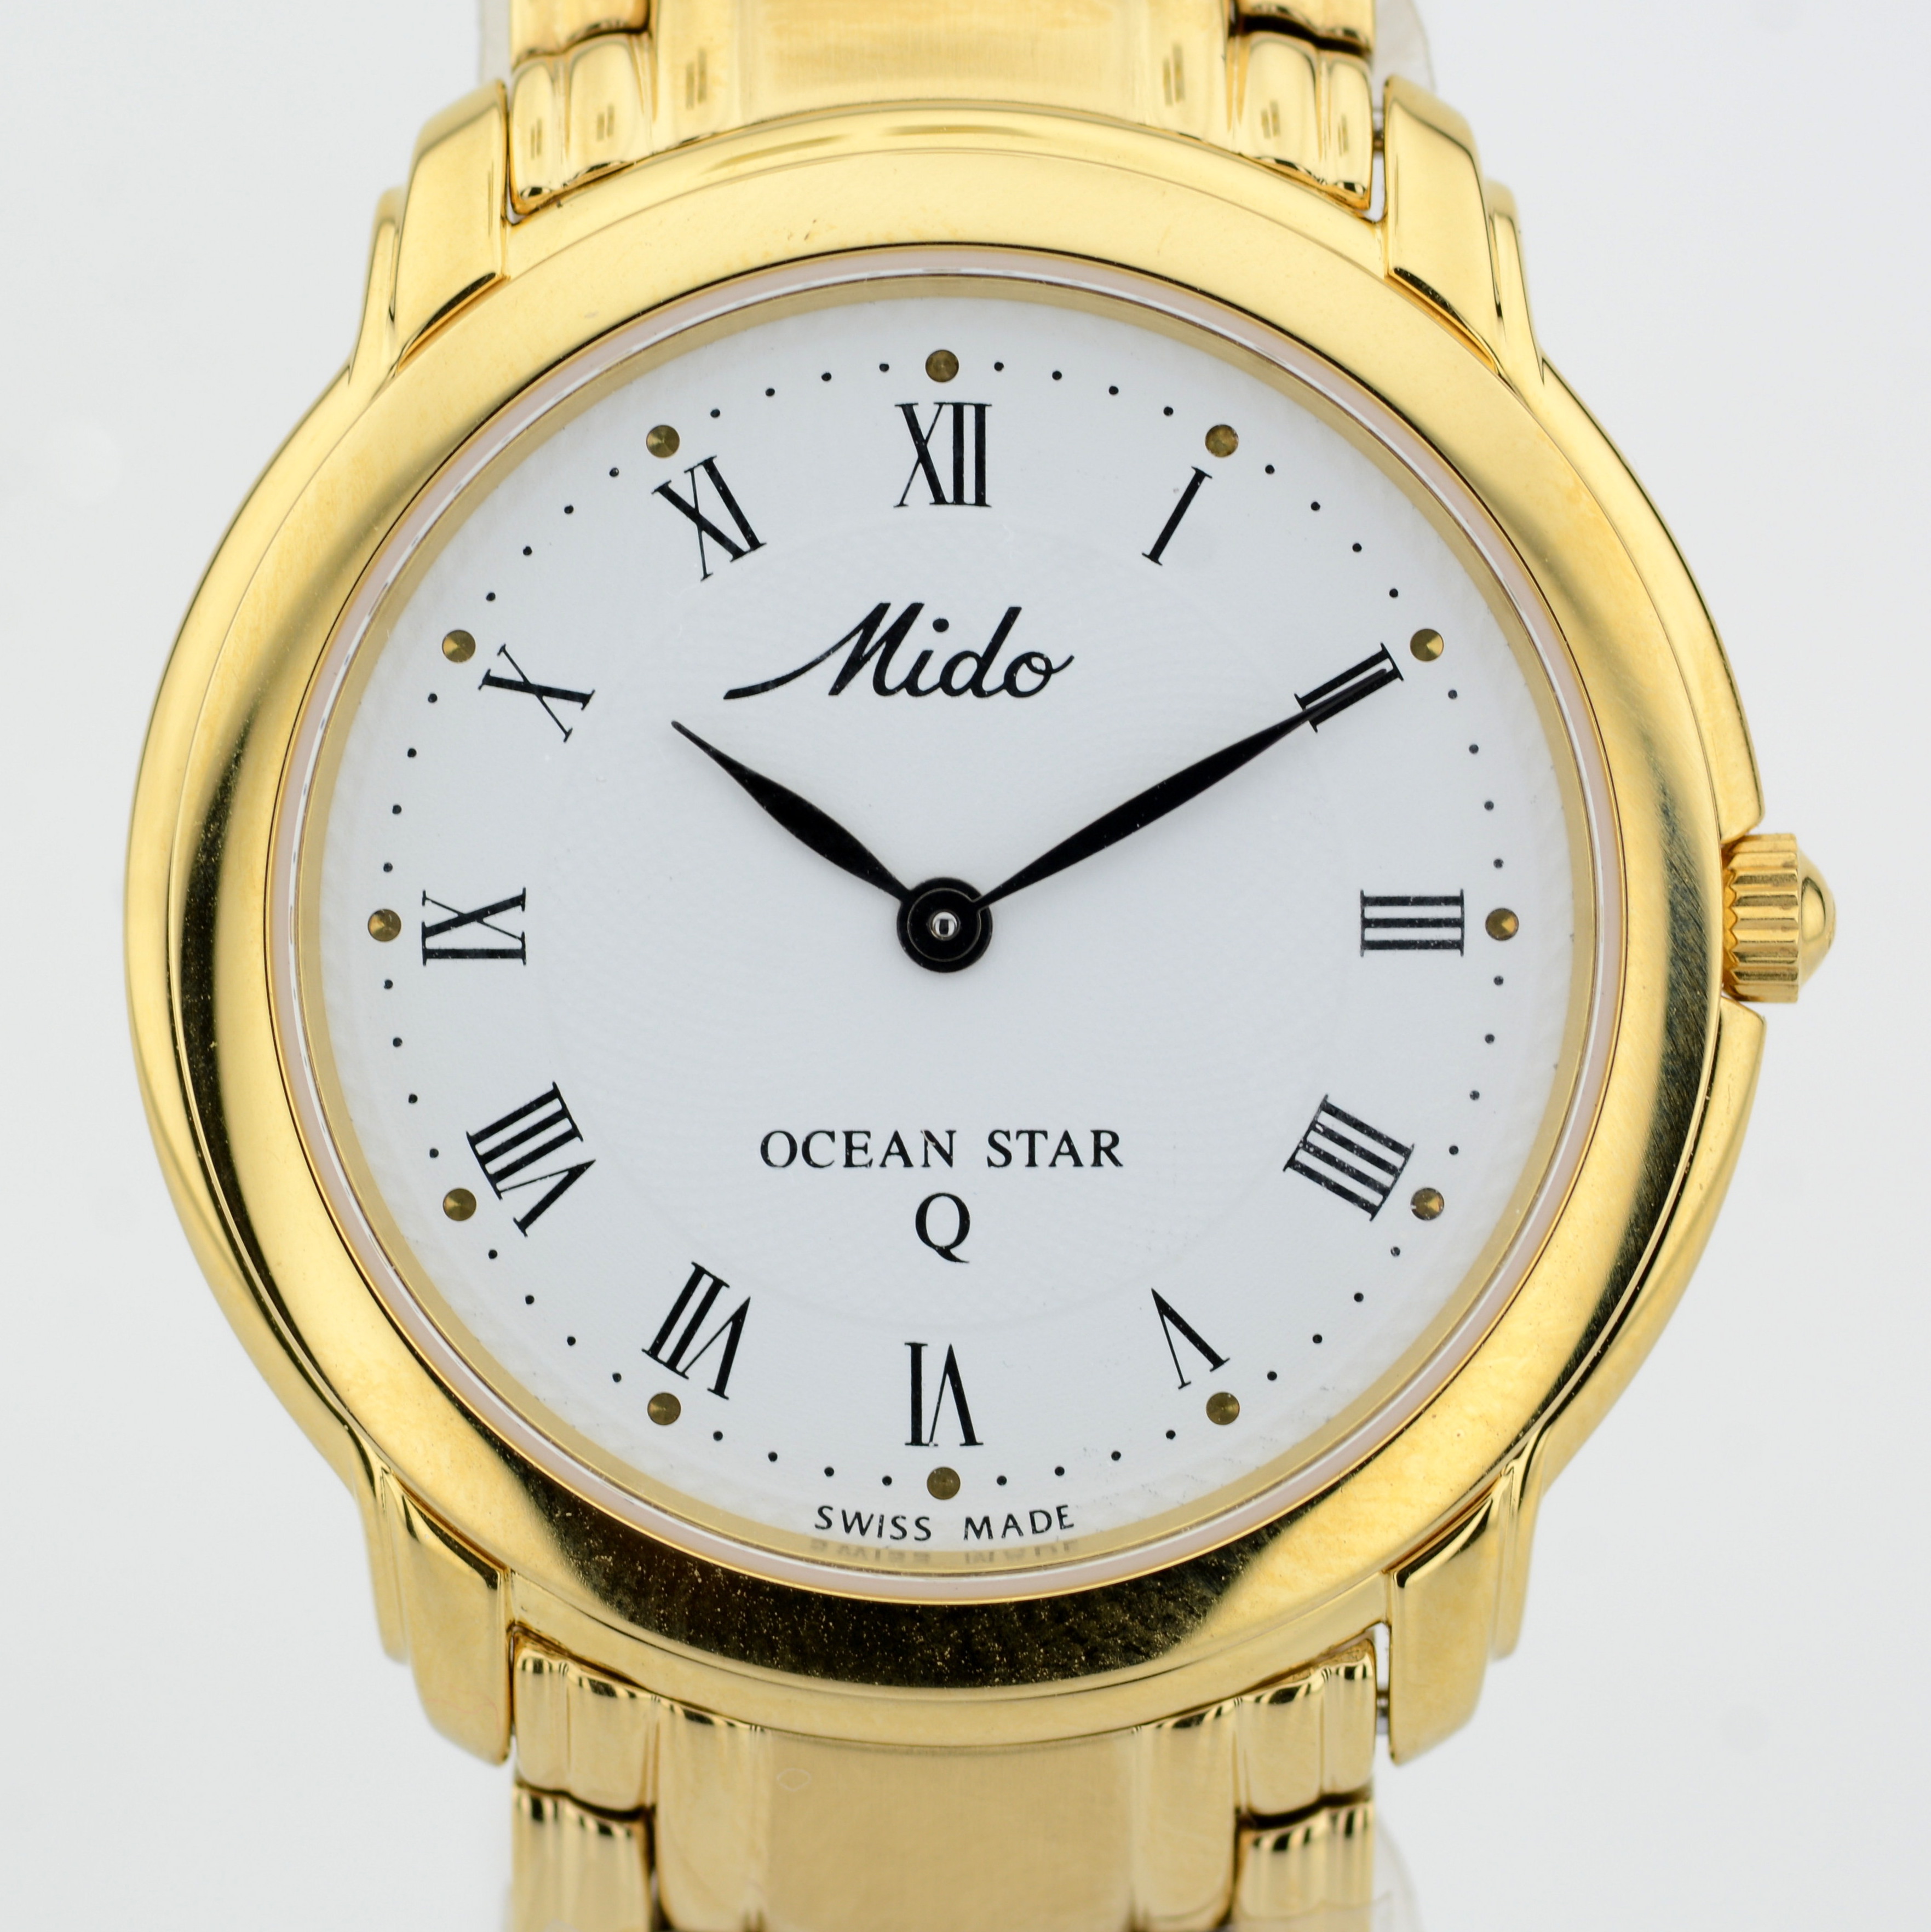 Mido / Ocean Star Automatic - (Unworn) Gentlmen's Gold-plated Wrist Watch